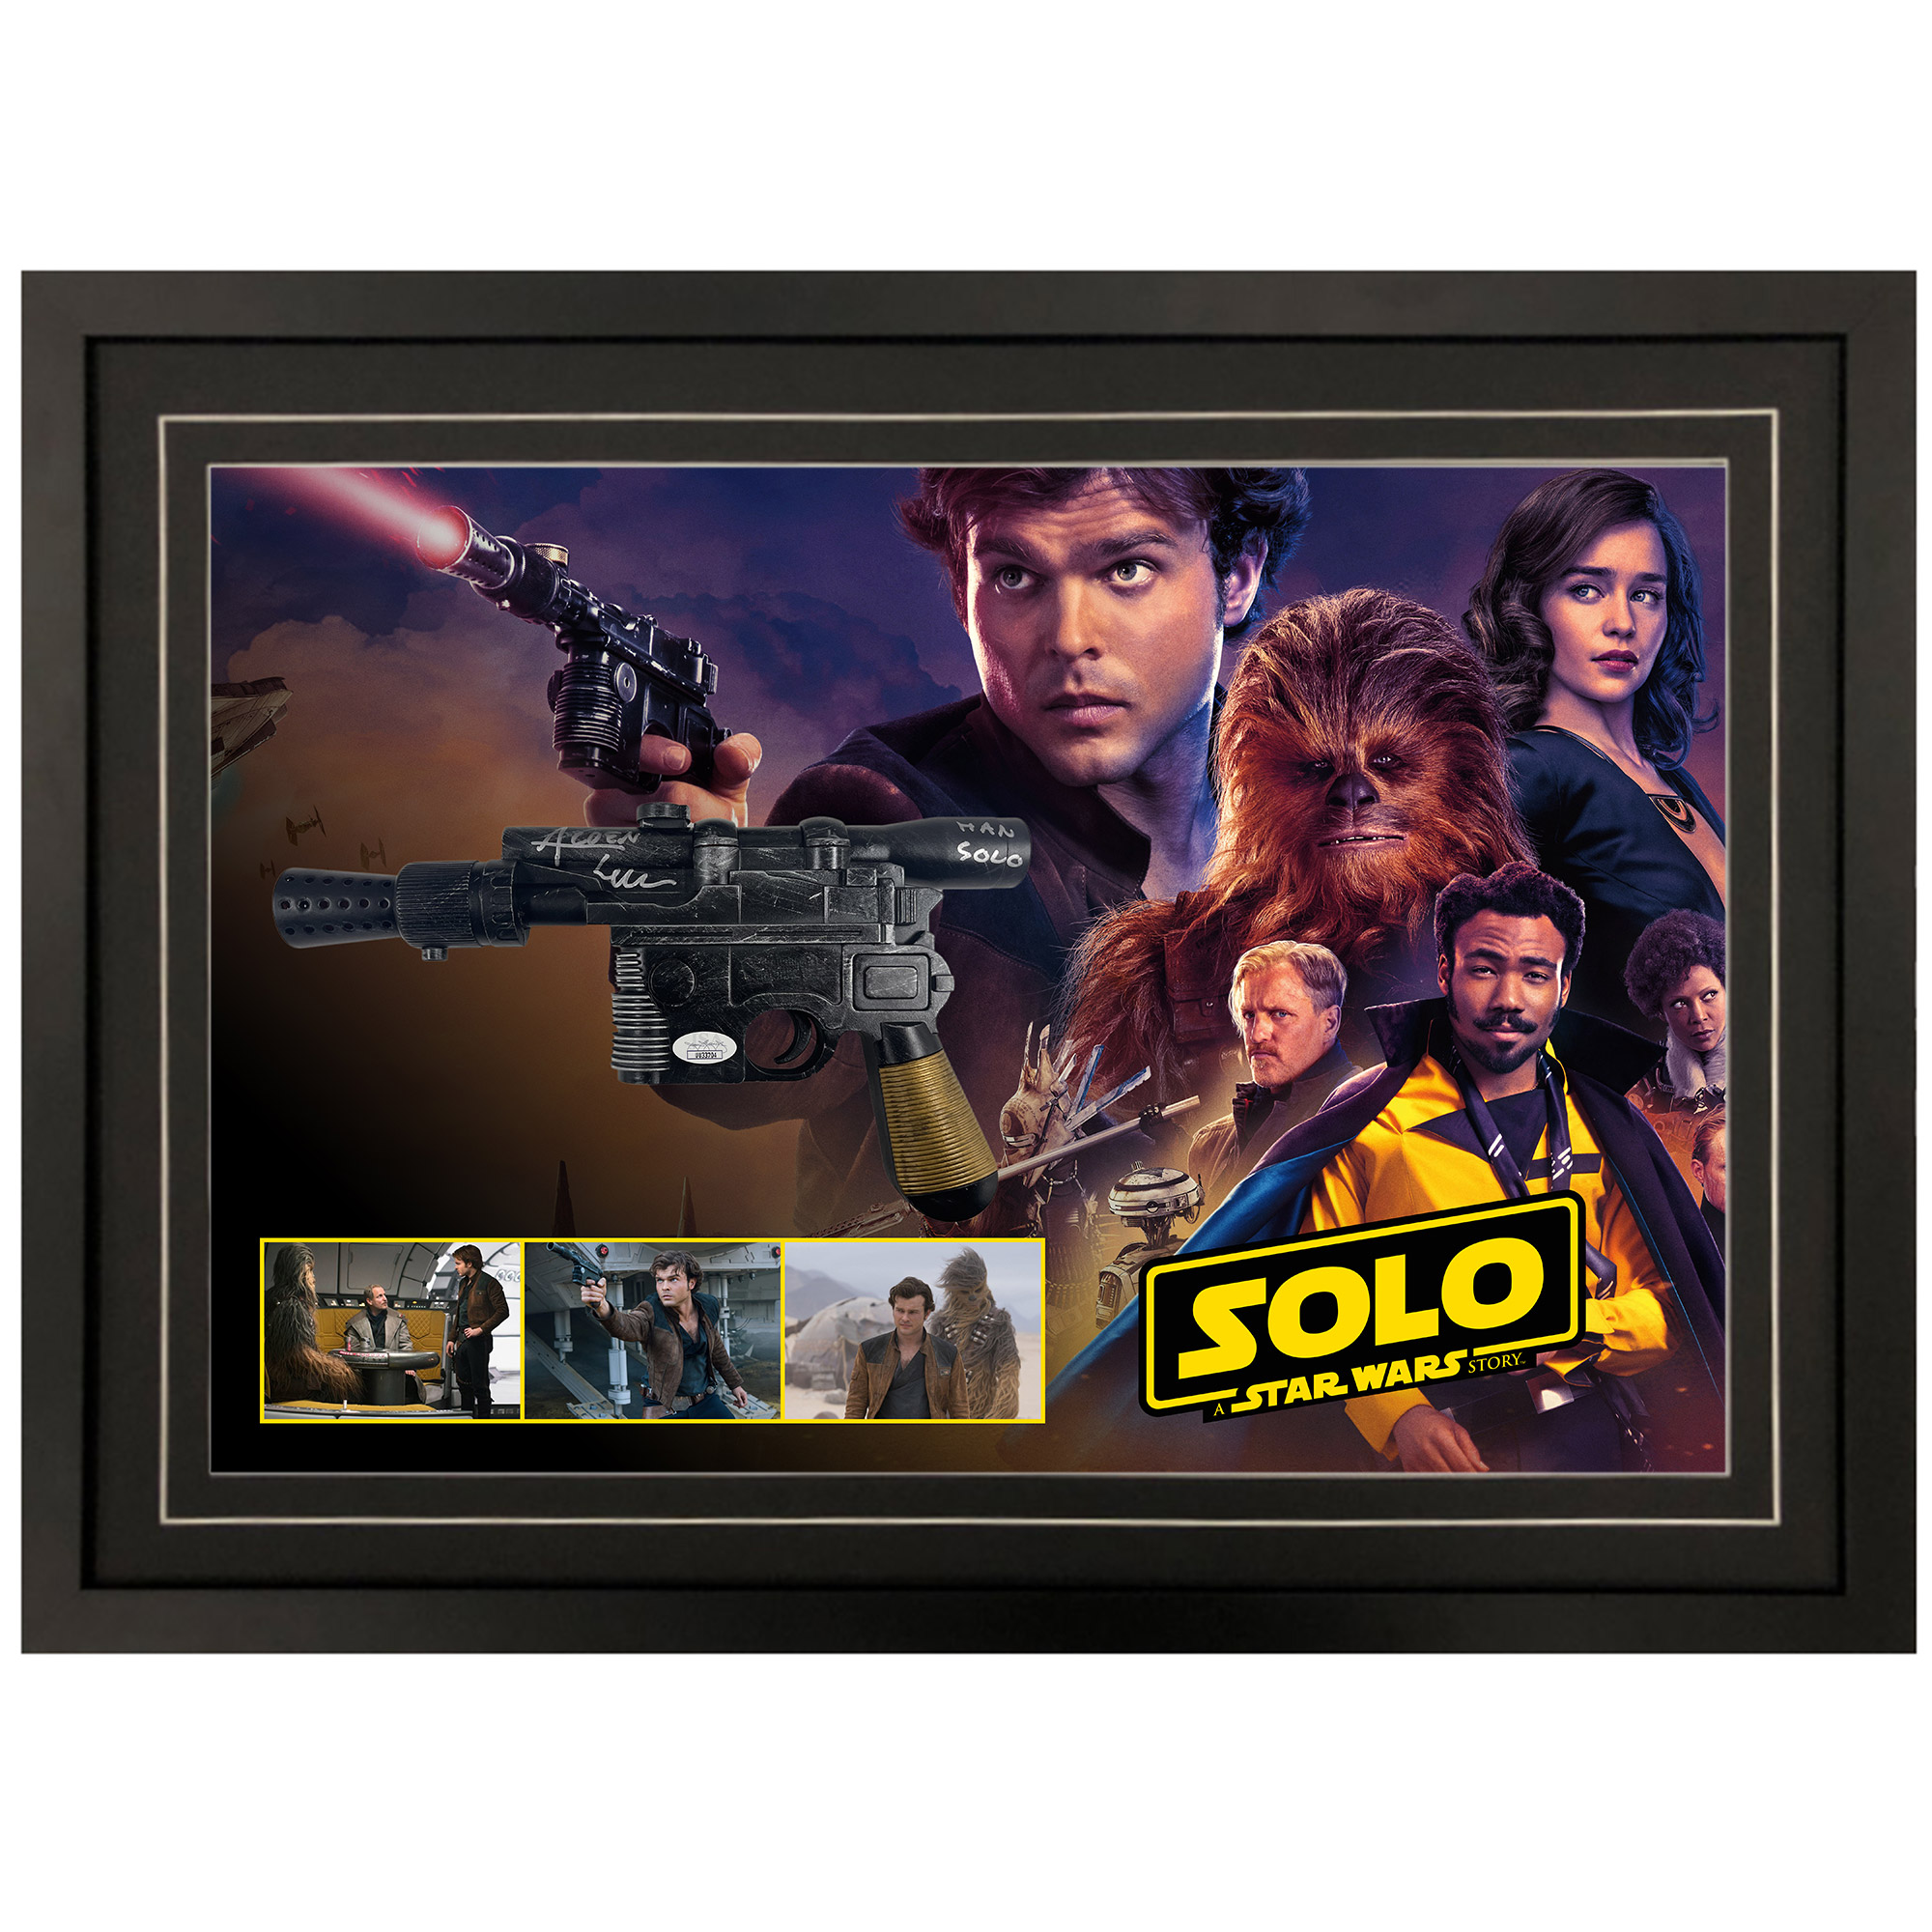 Alden Ehrenreich – “Solo: A Star Wars Story” Signed ...